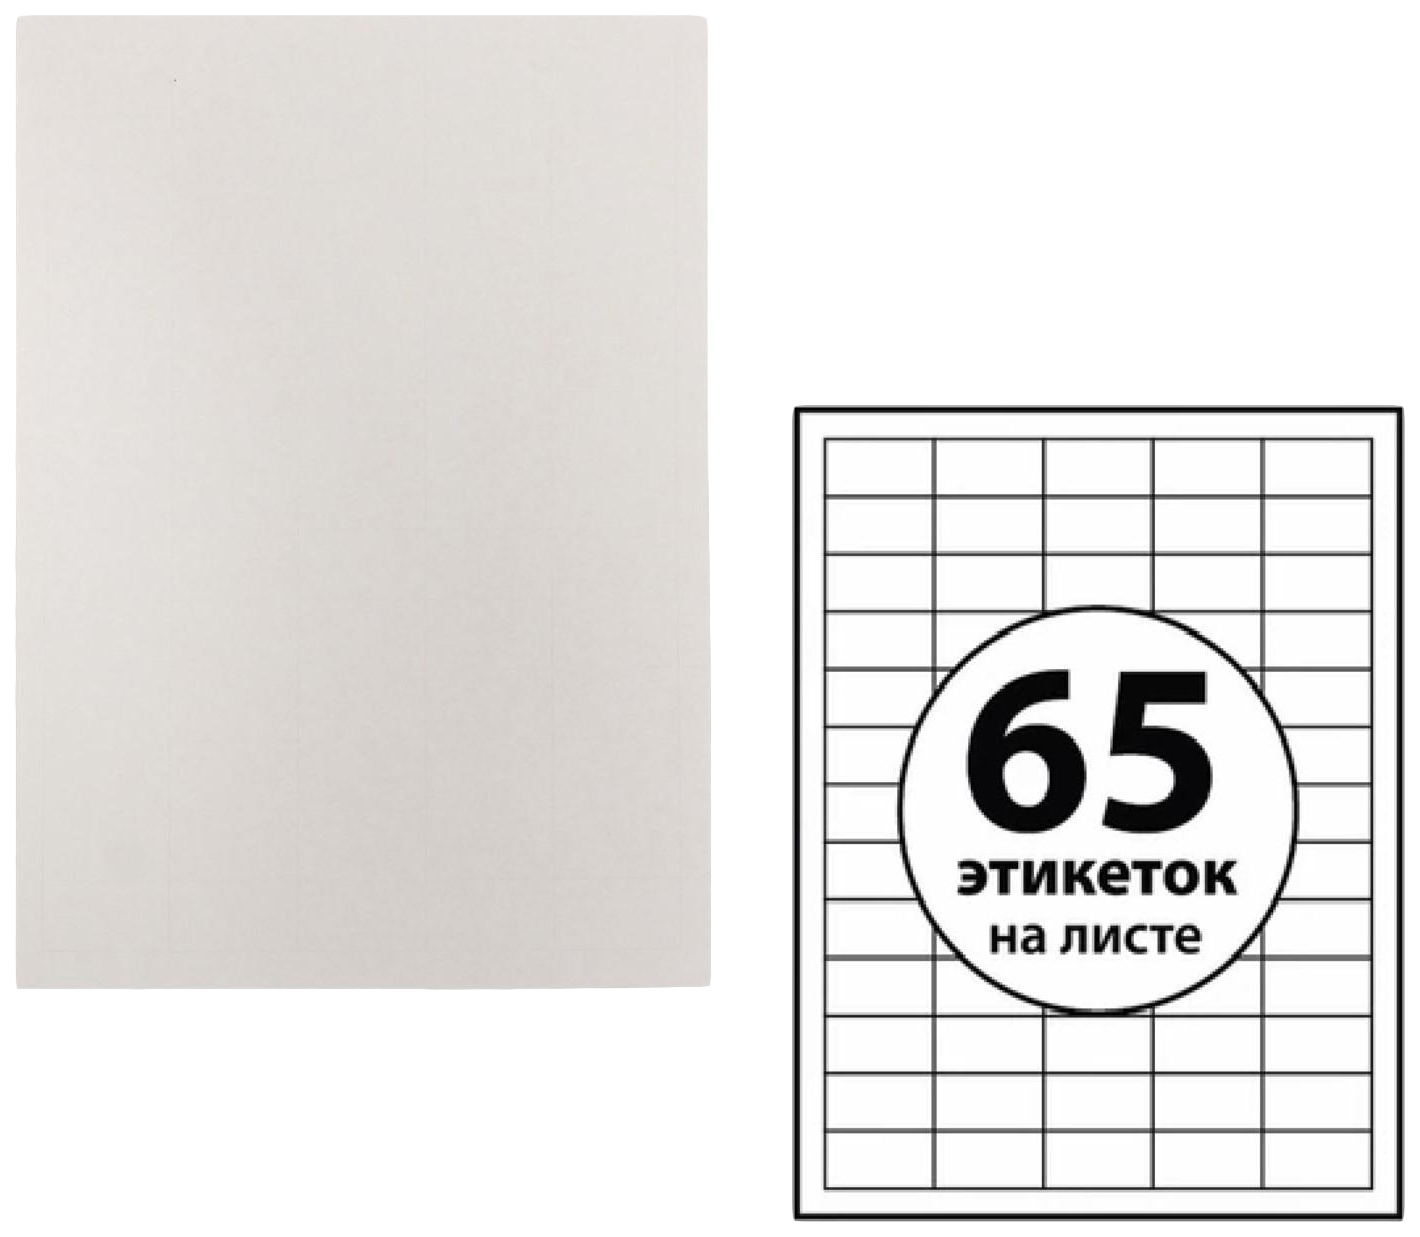 Этикетки А4 самоклеящиеся 50 л, 80 г/м, на листе 65 этикеток, размер: 38 х 21,2 мм, белые